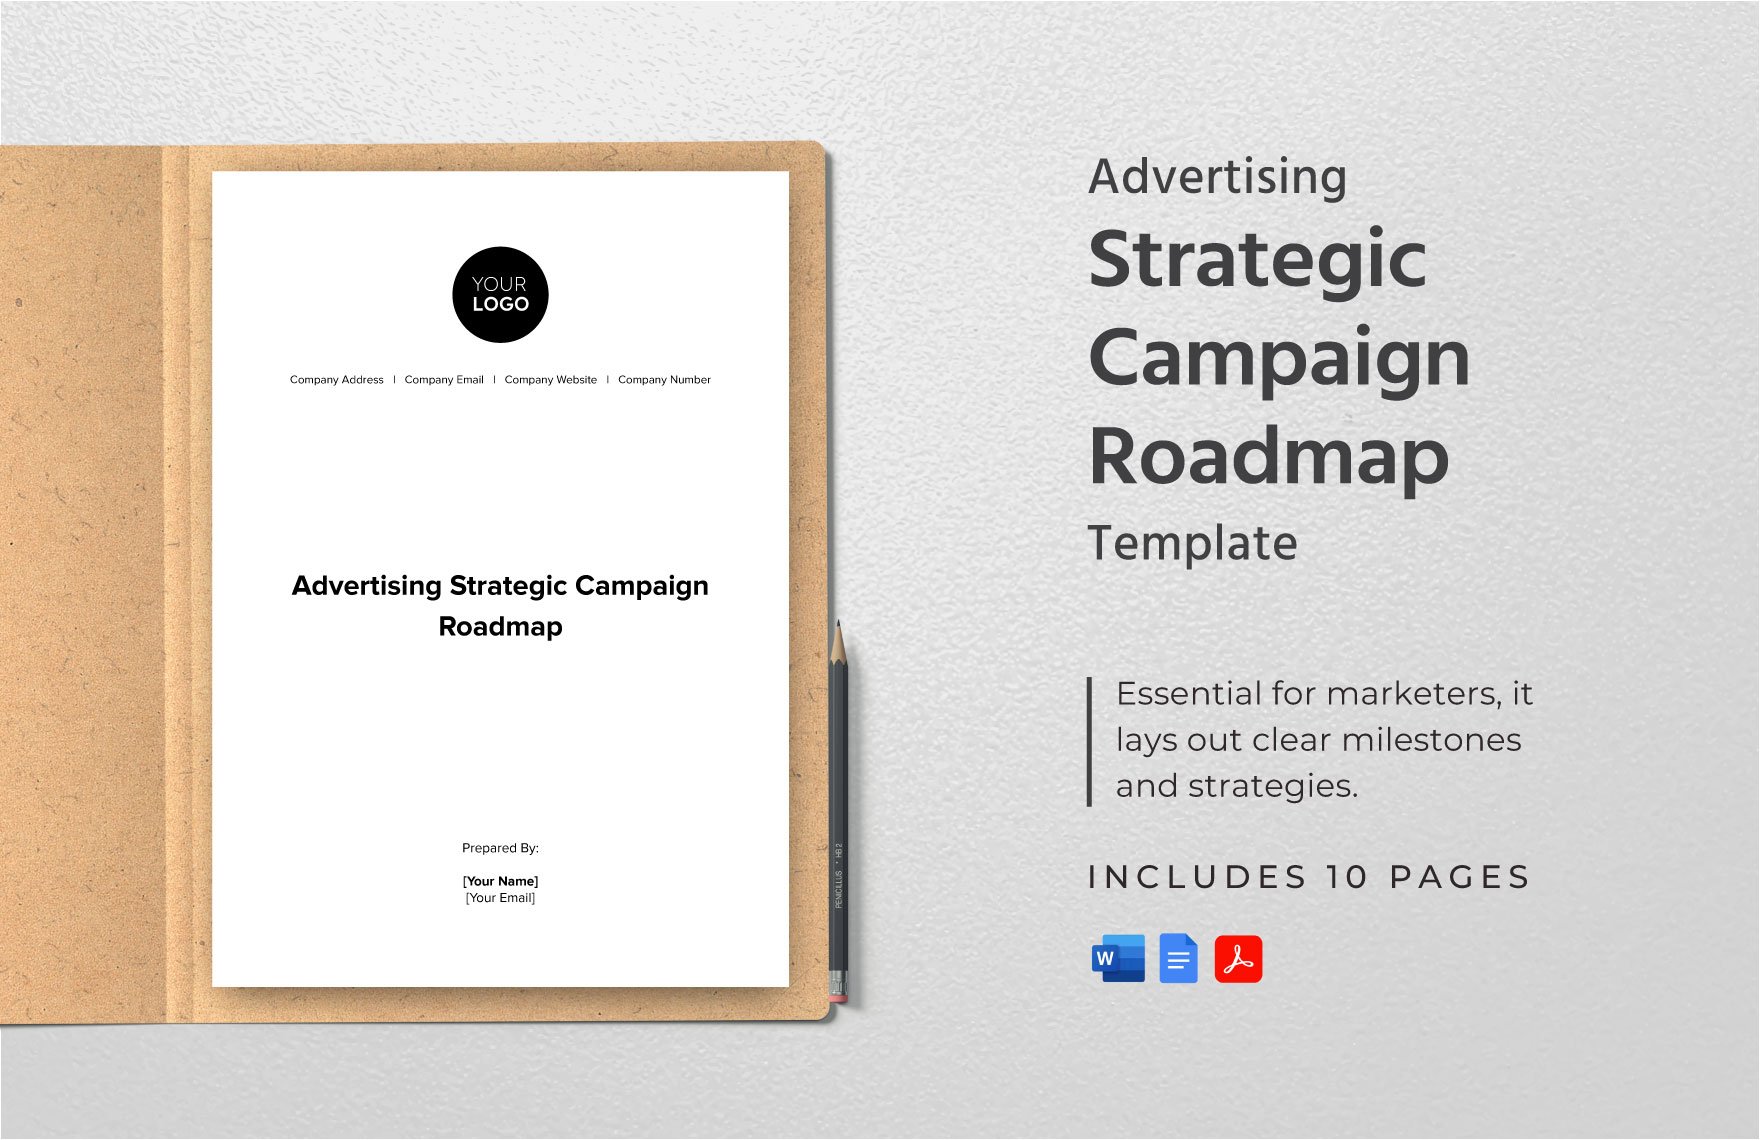 Advertising Strategic Campaign Roadmap Template